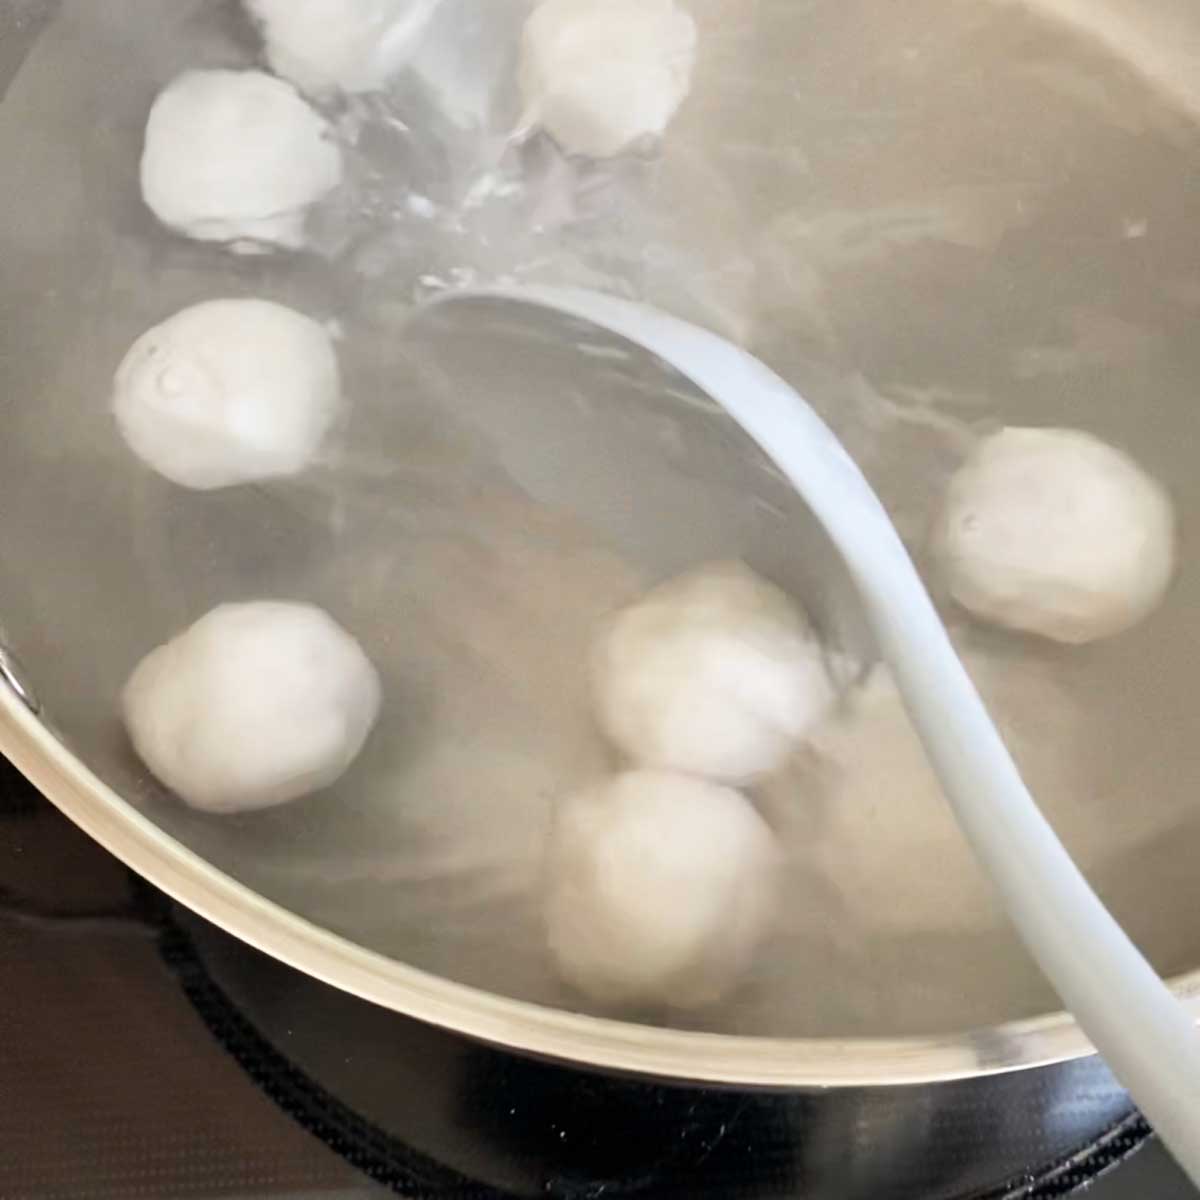 Taro Tang Yuan - Chinese Glutinous Rice Balls Recipe (Gluten Free, Vegan) - Any Flavored Glaze